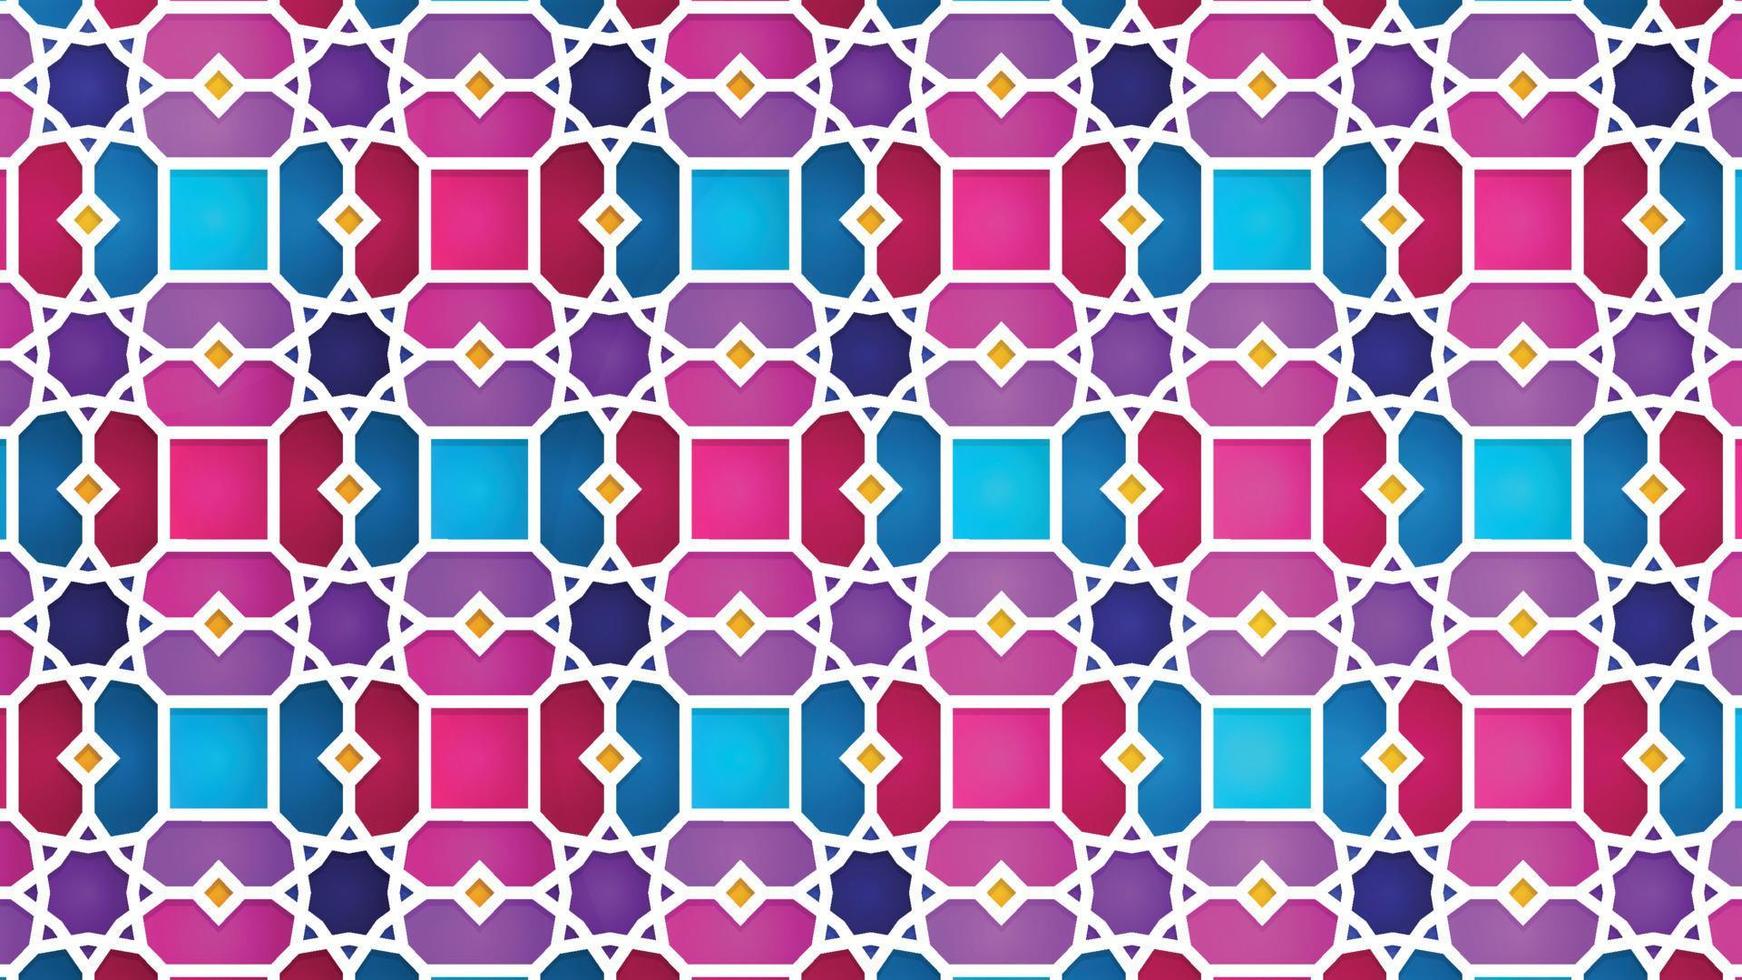 geometriska islamiska mönster illustration bakgrund eller banner design vektor